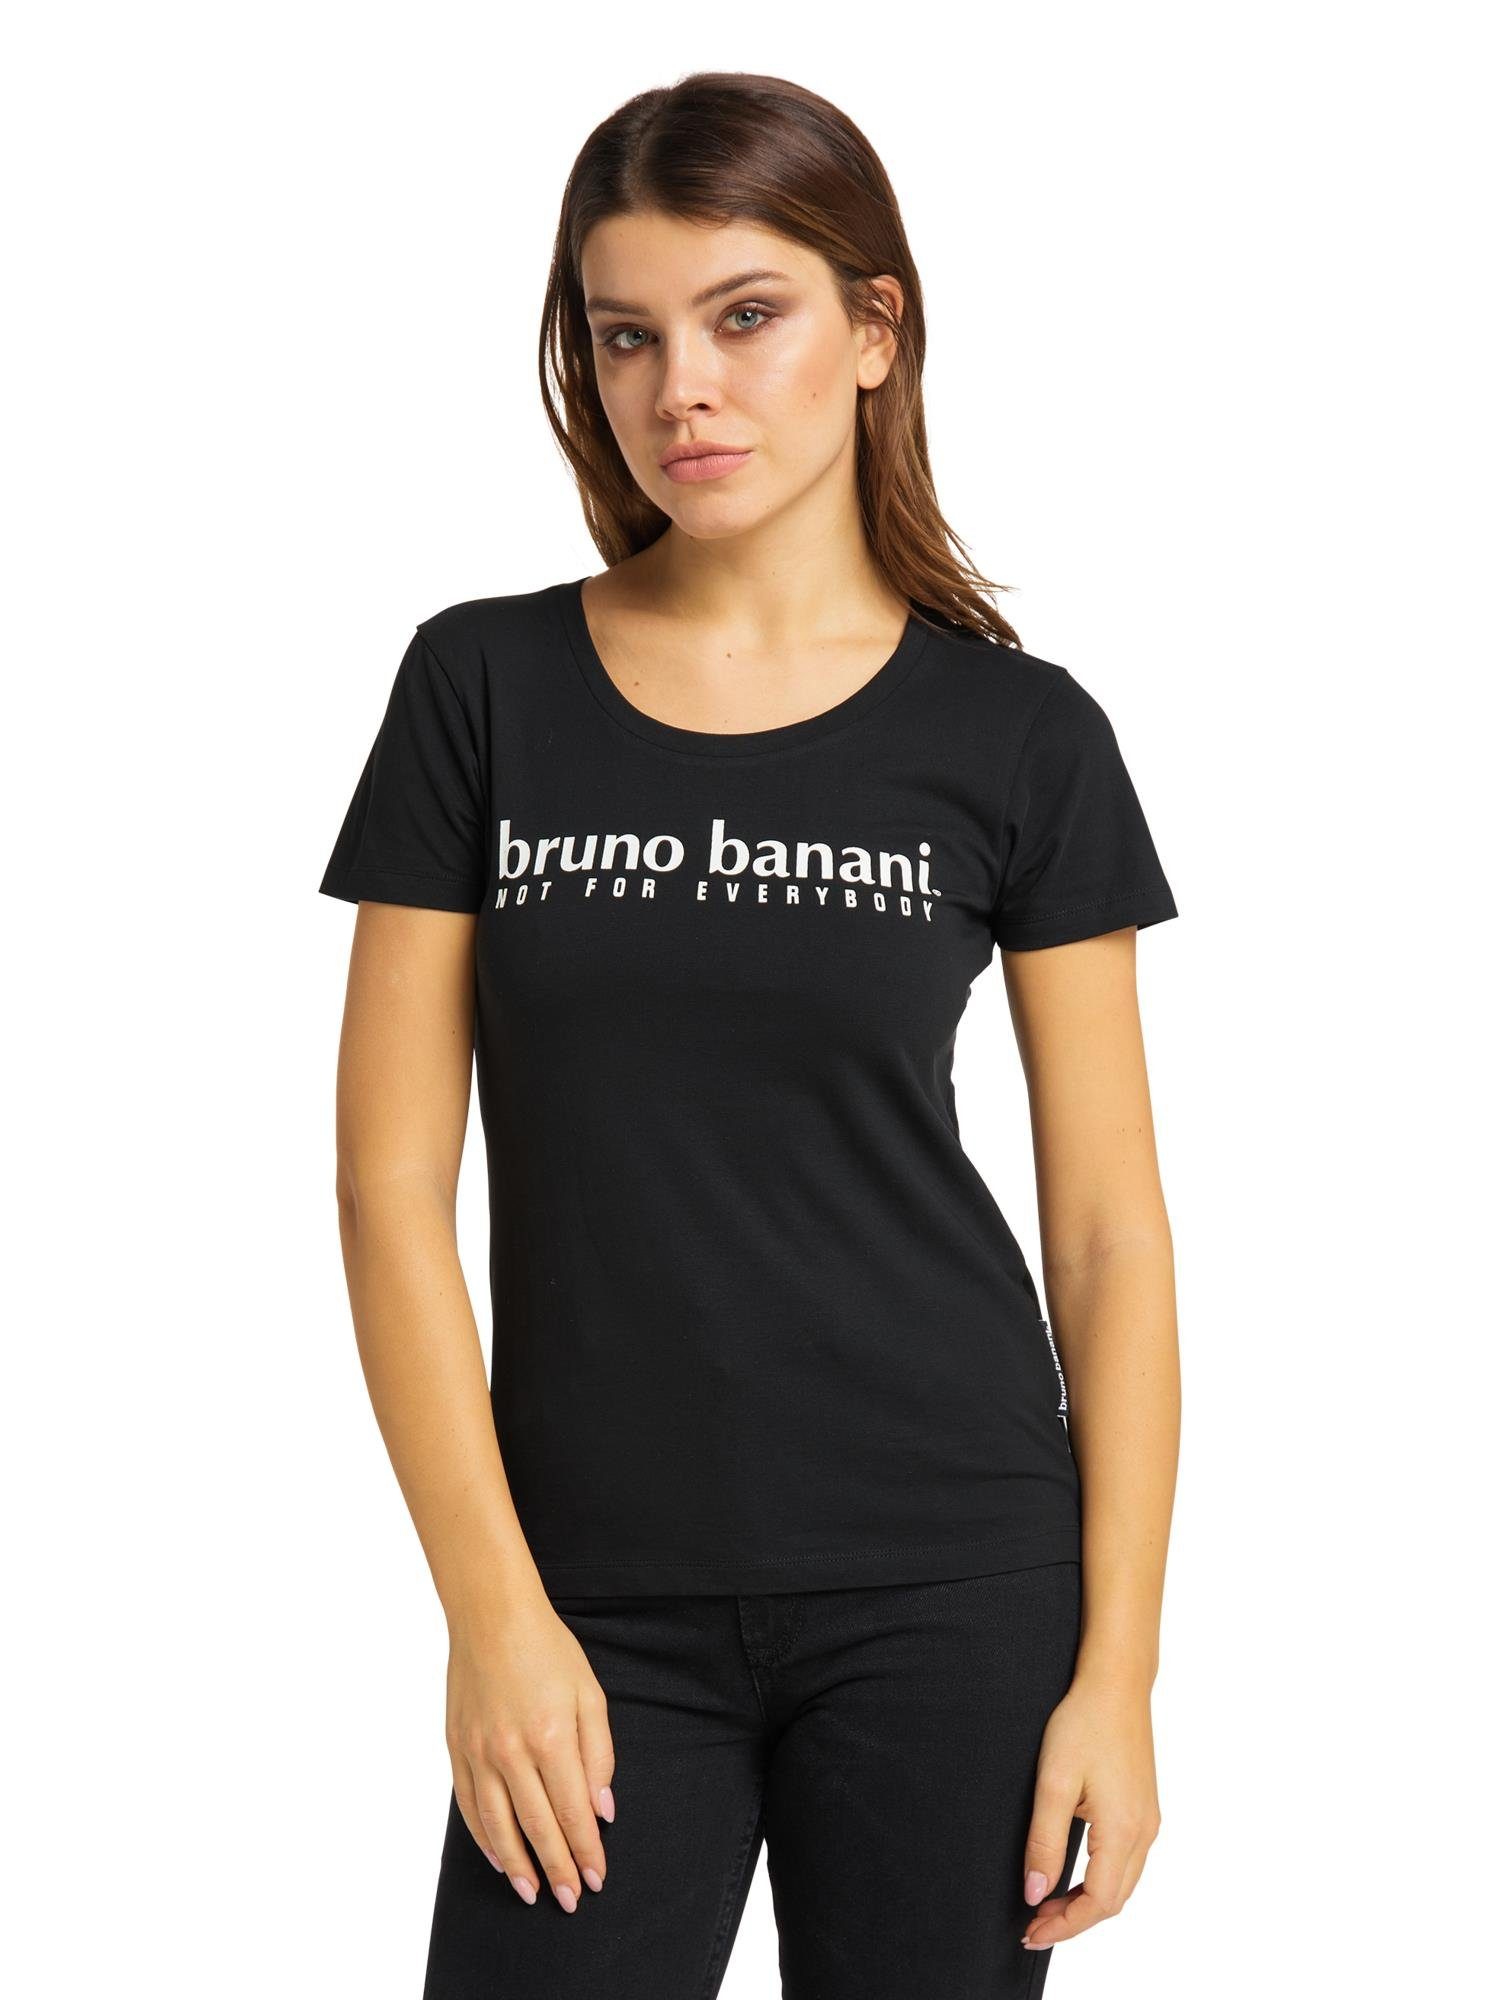 Bruno Banani T-Shirt BAIRD